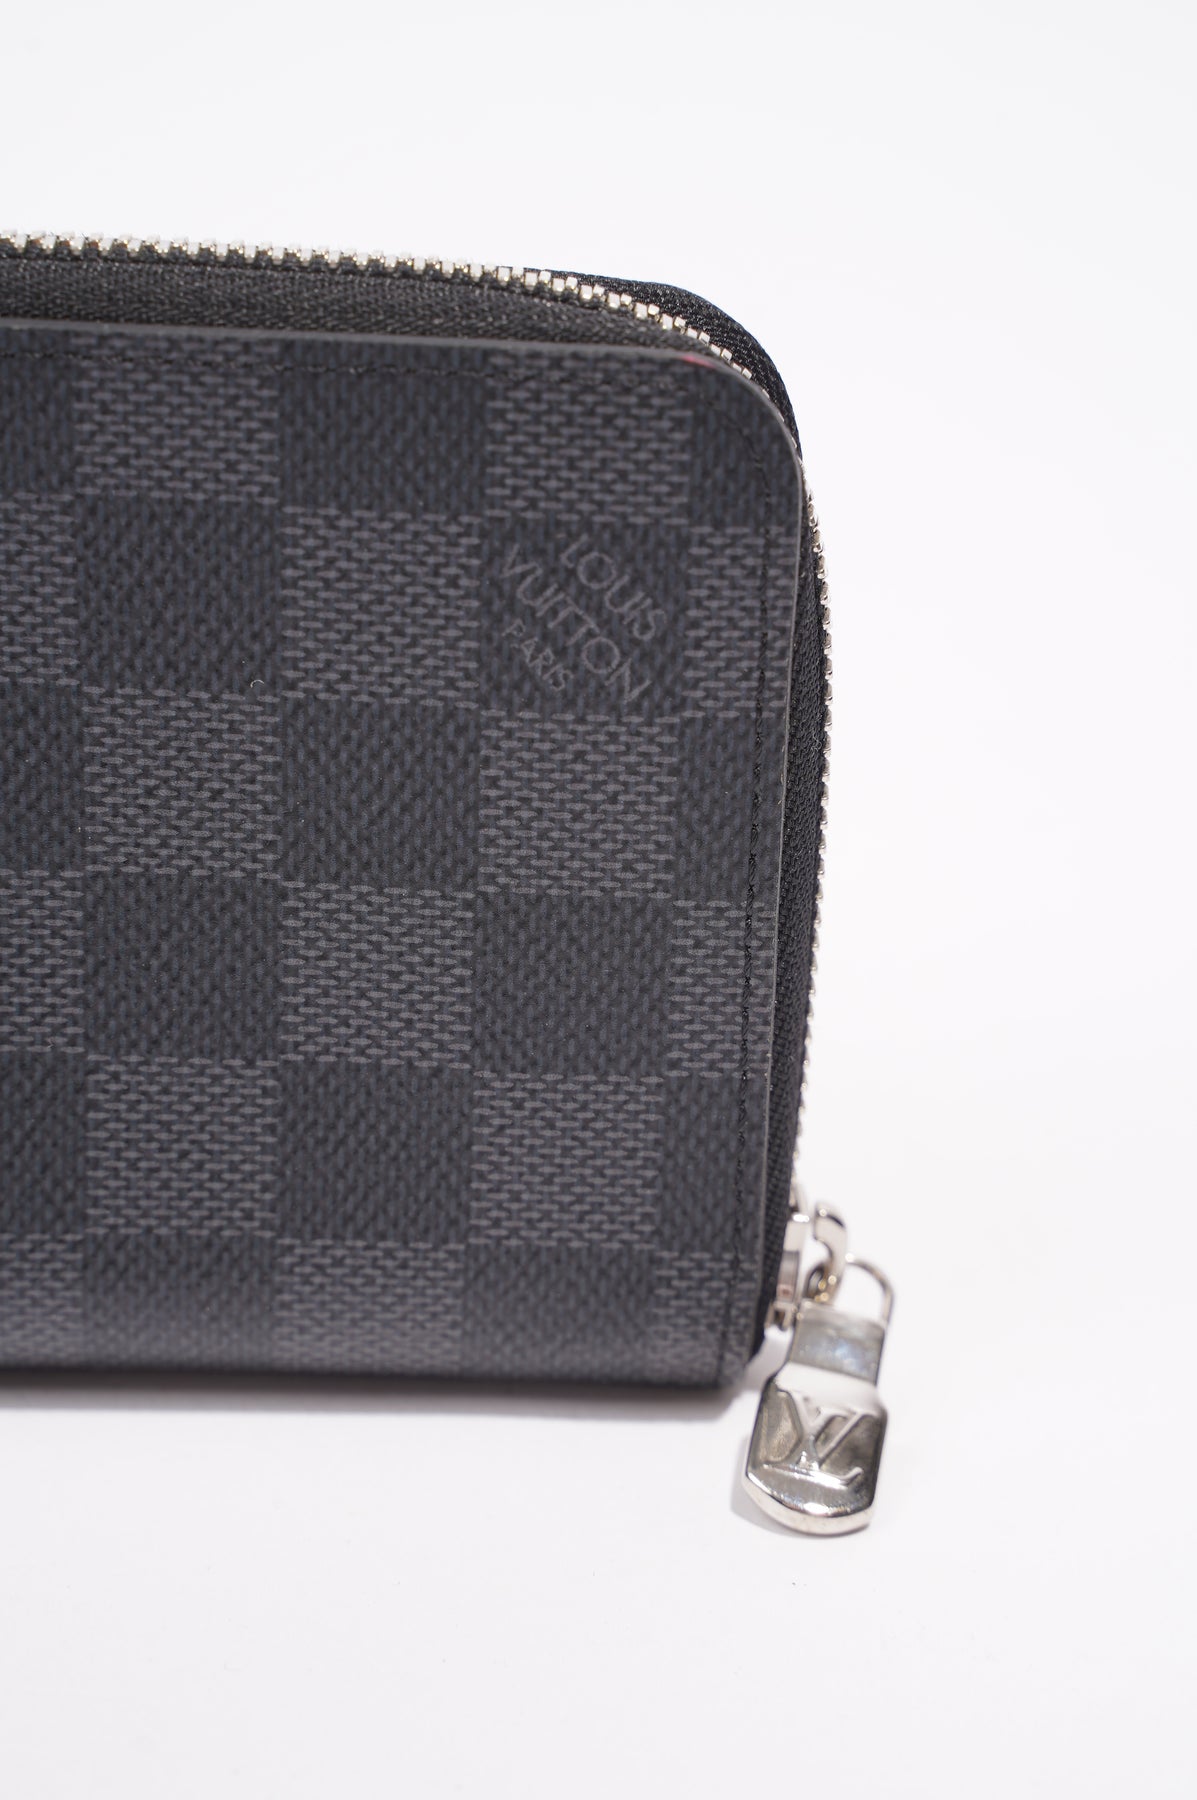 Louis Vuitton Damier Graphite Zippy Vertical Wallet QJACBDQCKB003